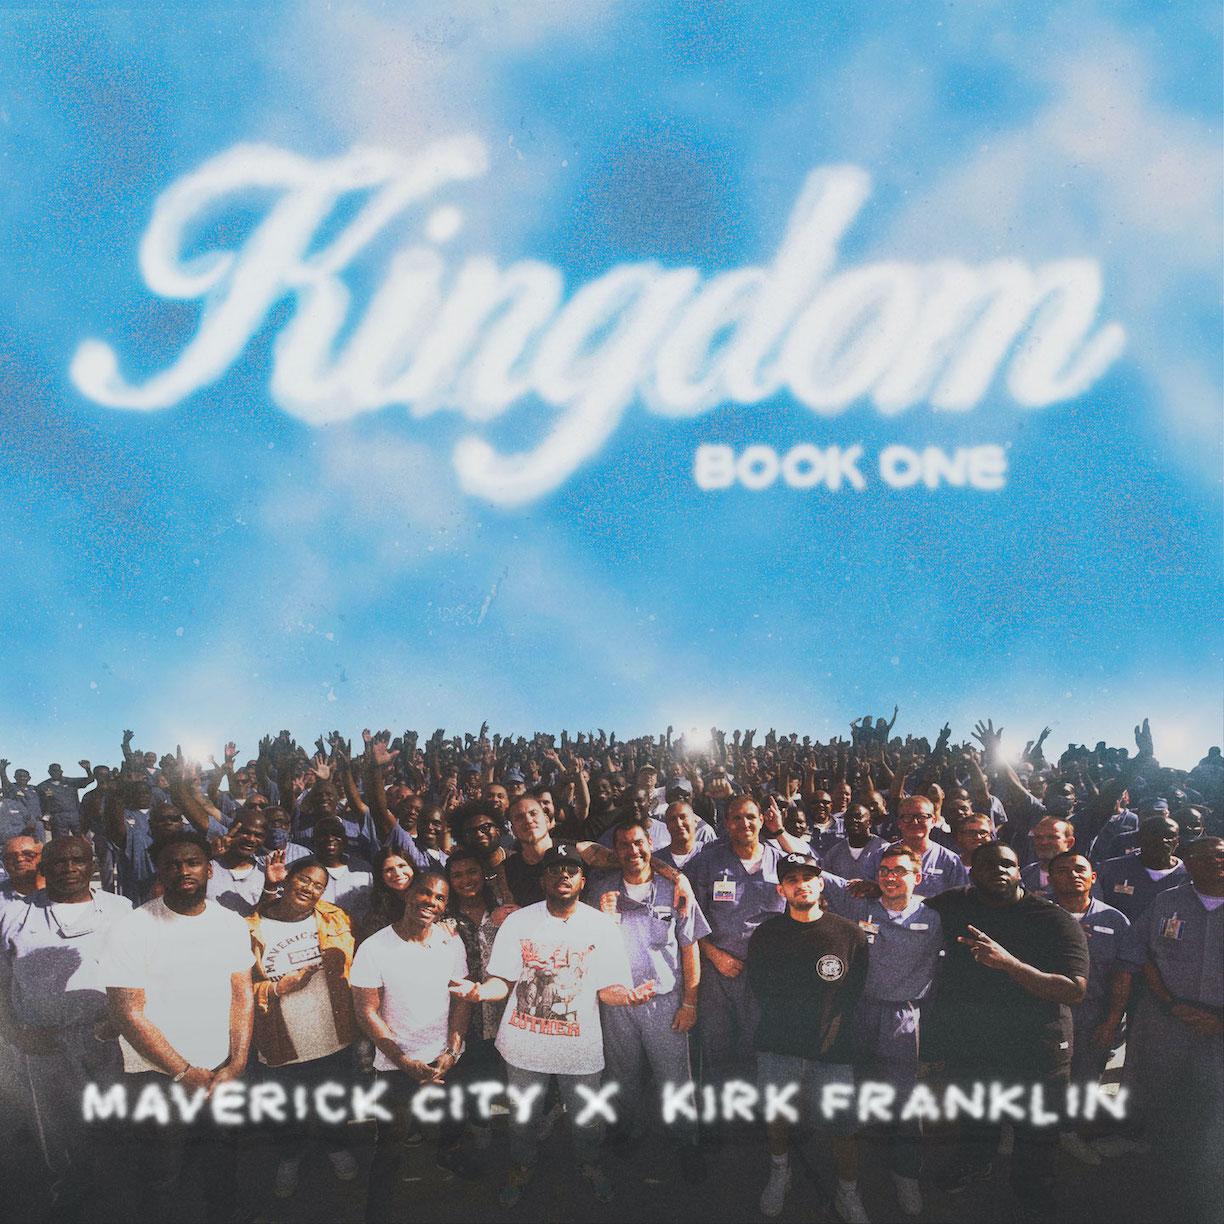 Maverick City Music x Kirk Franklin (Image courtesy of Shore Fire Media)